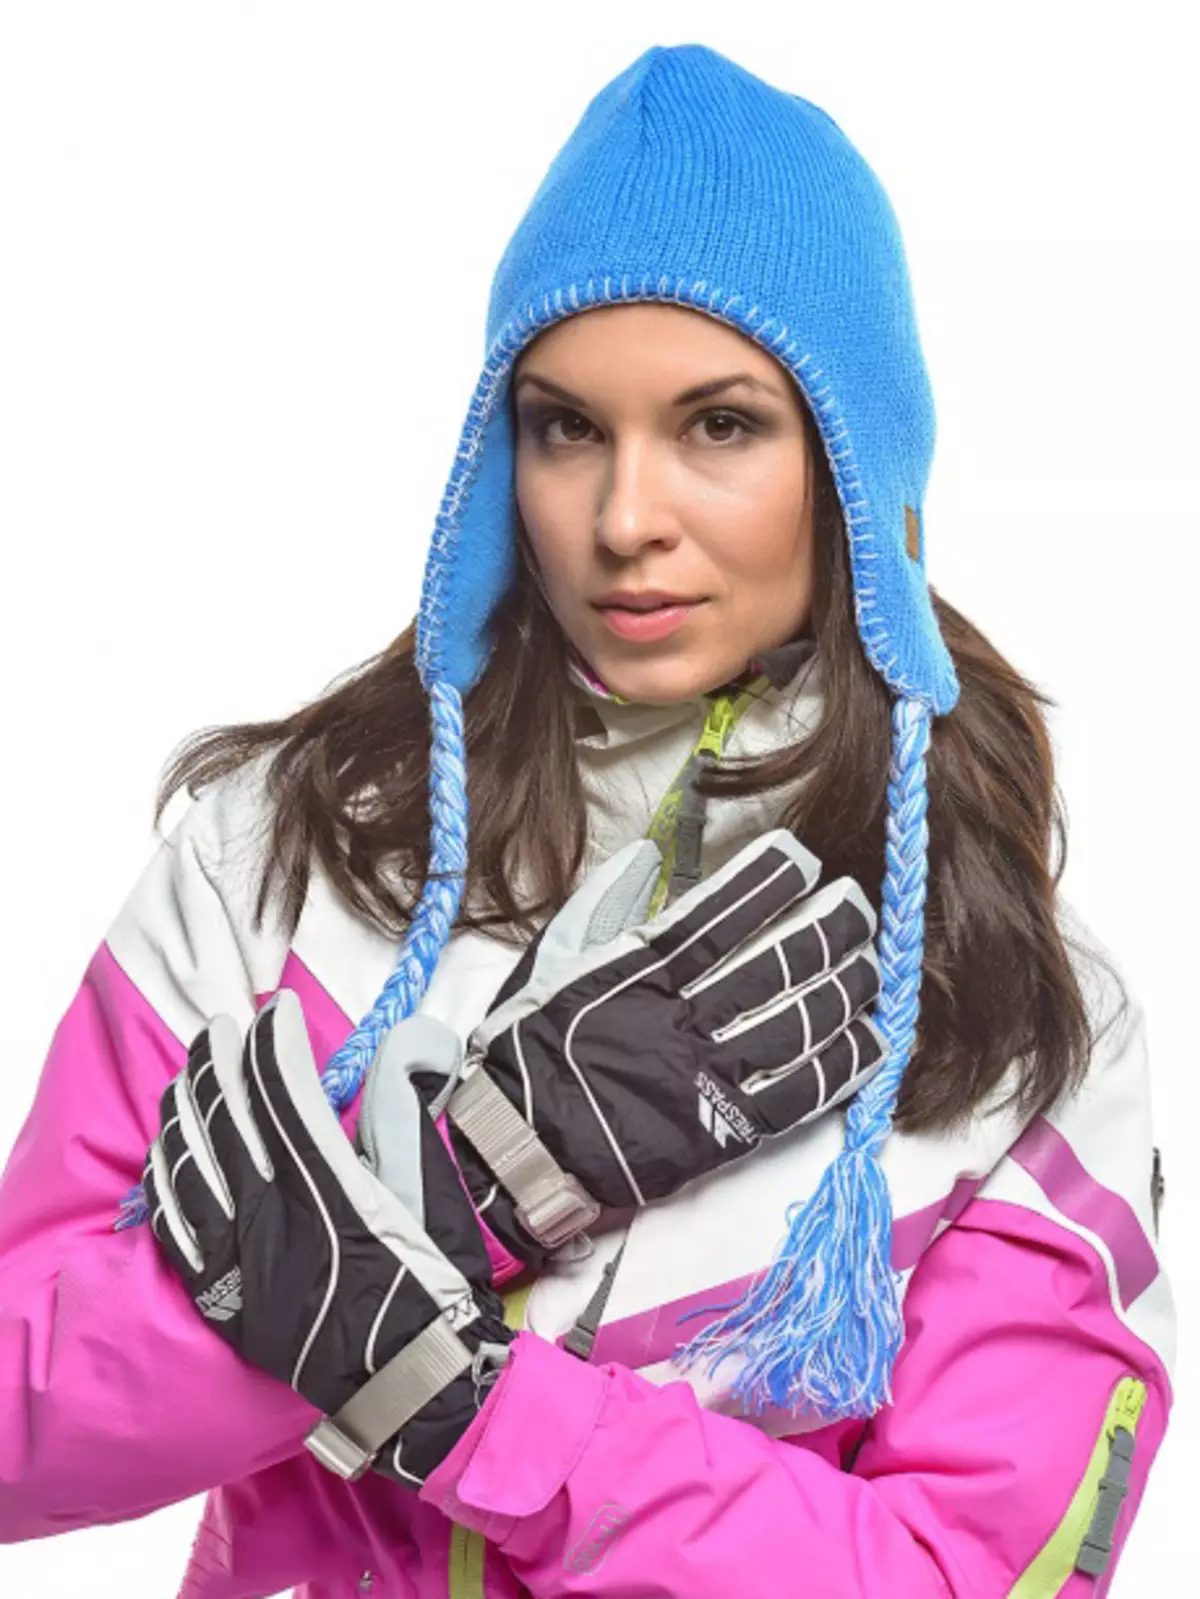 Sarung Tangan Ski (61 Gambar): Model ski wanita untuk olahraga, ikhtisar merek populer - Reyshe, Kepala, Salomon, Leki 15203_31